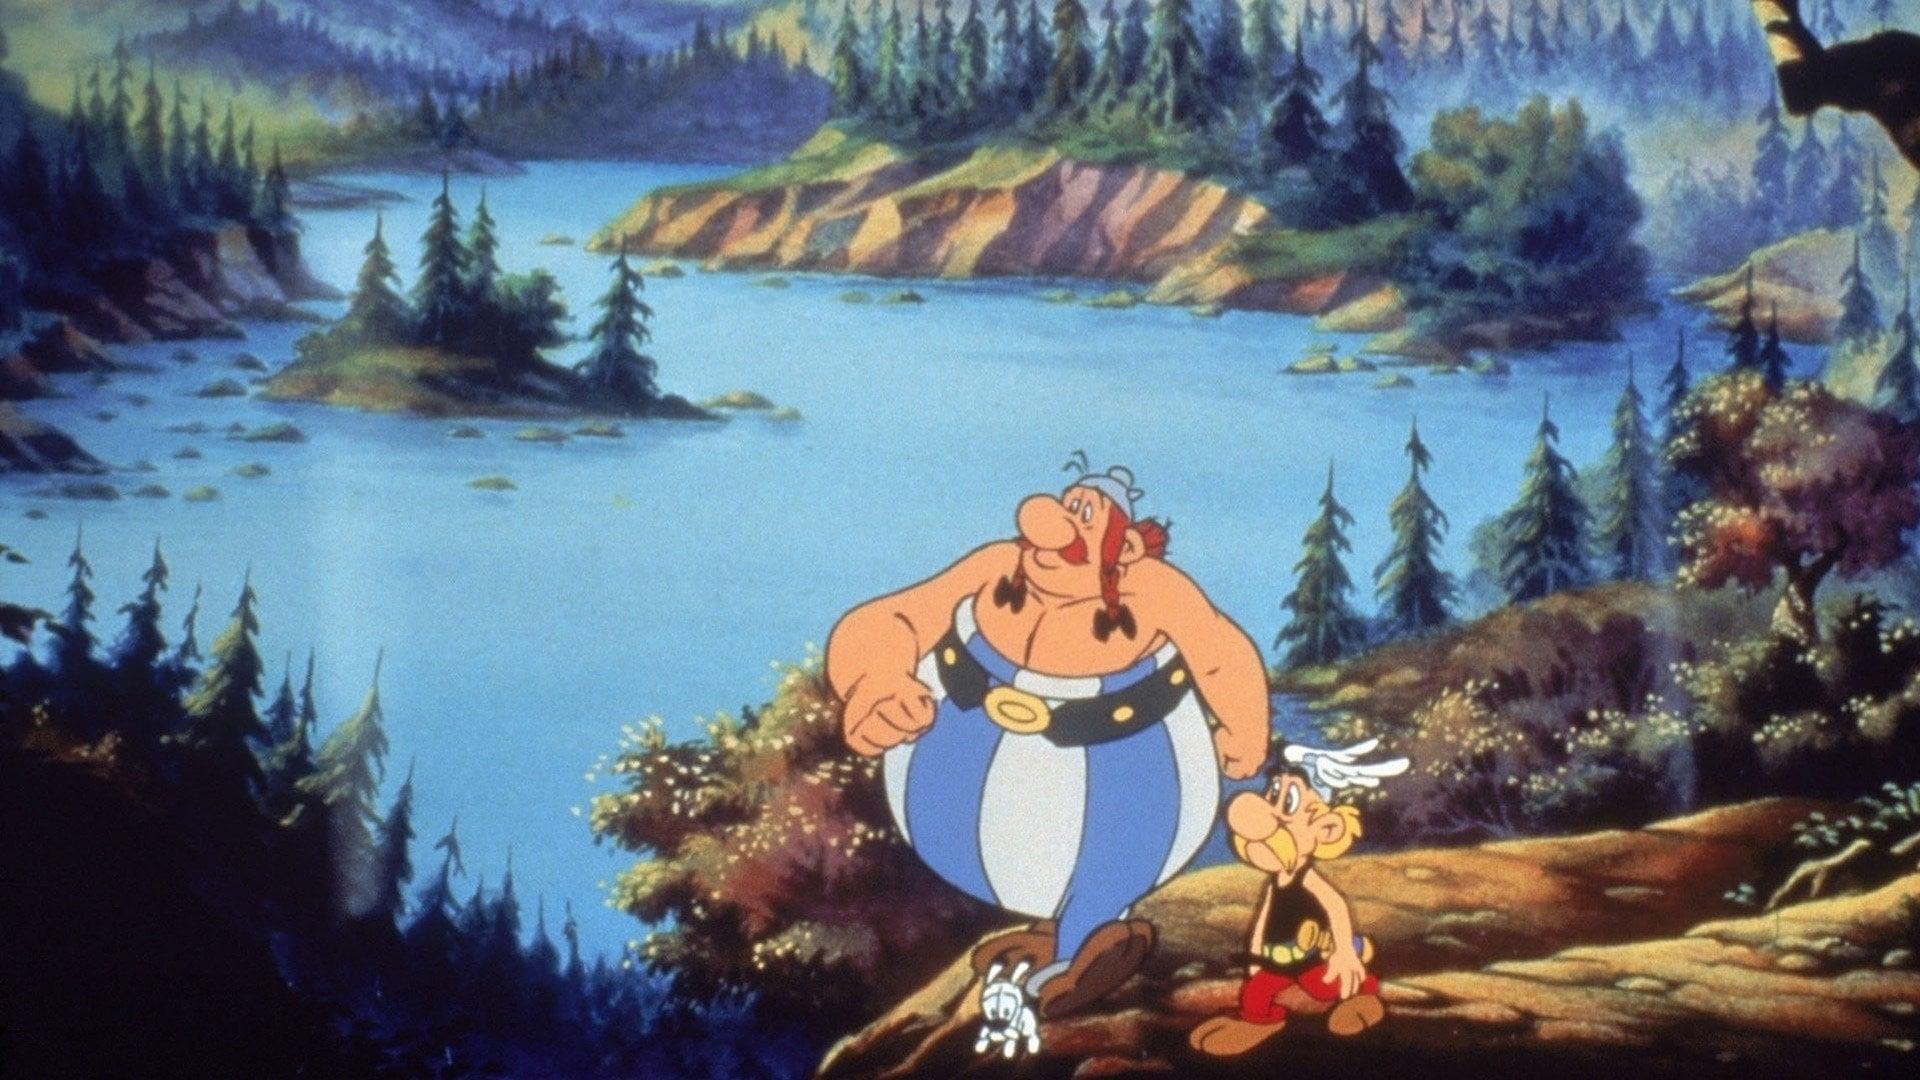 Asterix Conquers America backdrop